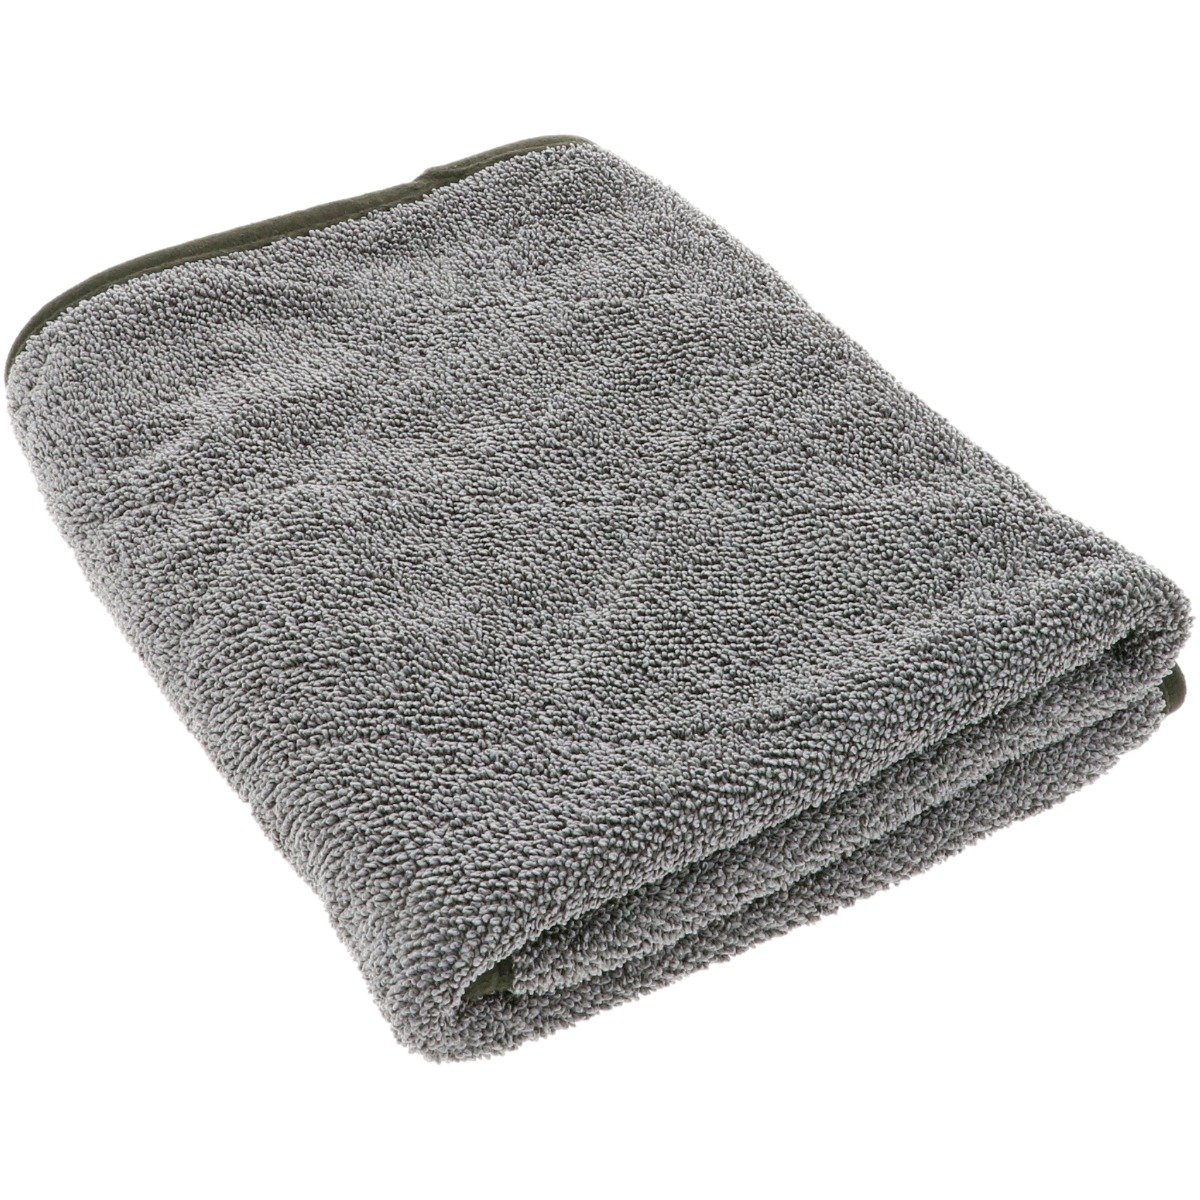 The Double Twistress Towel - 51x61cm